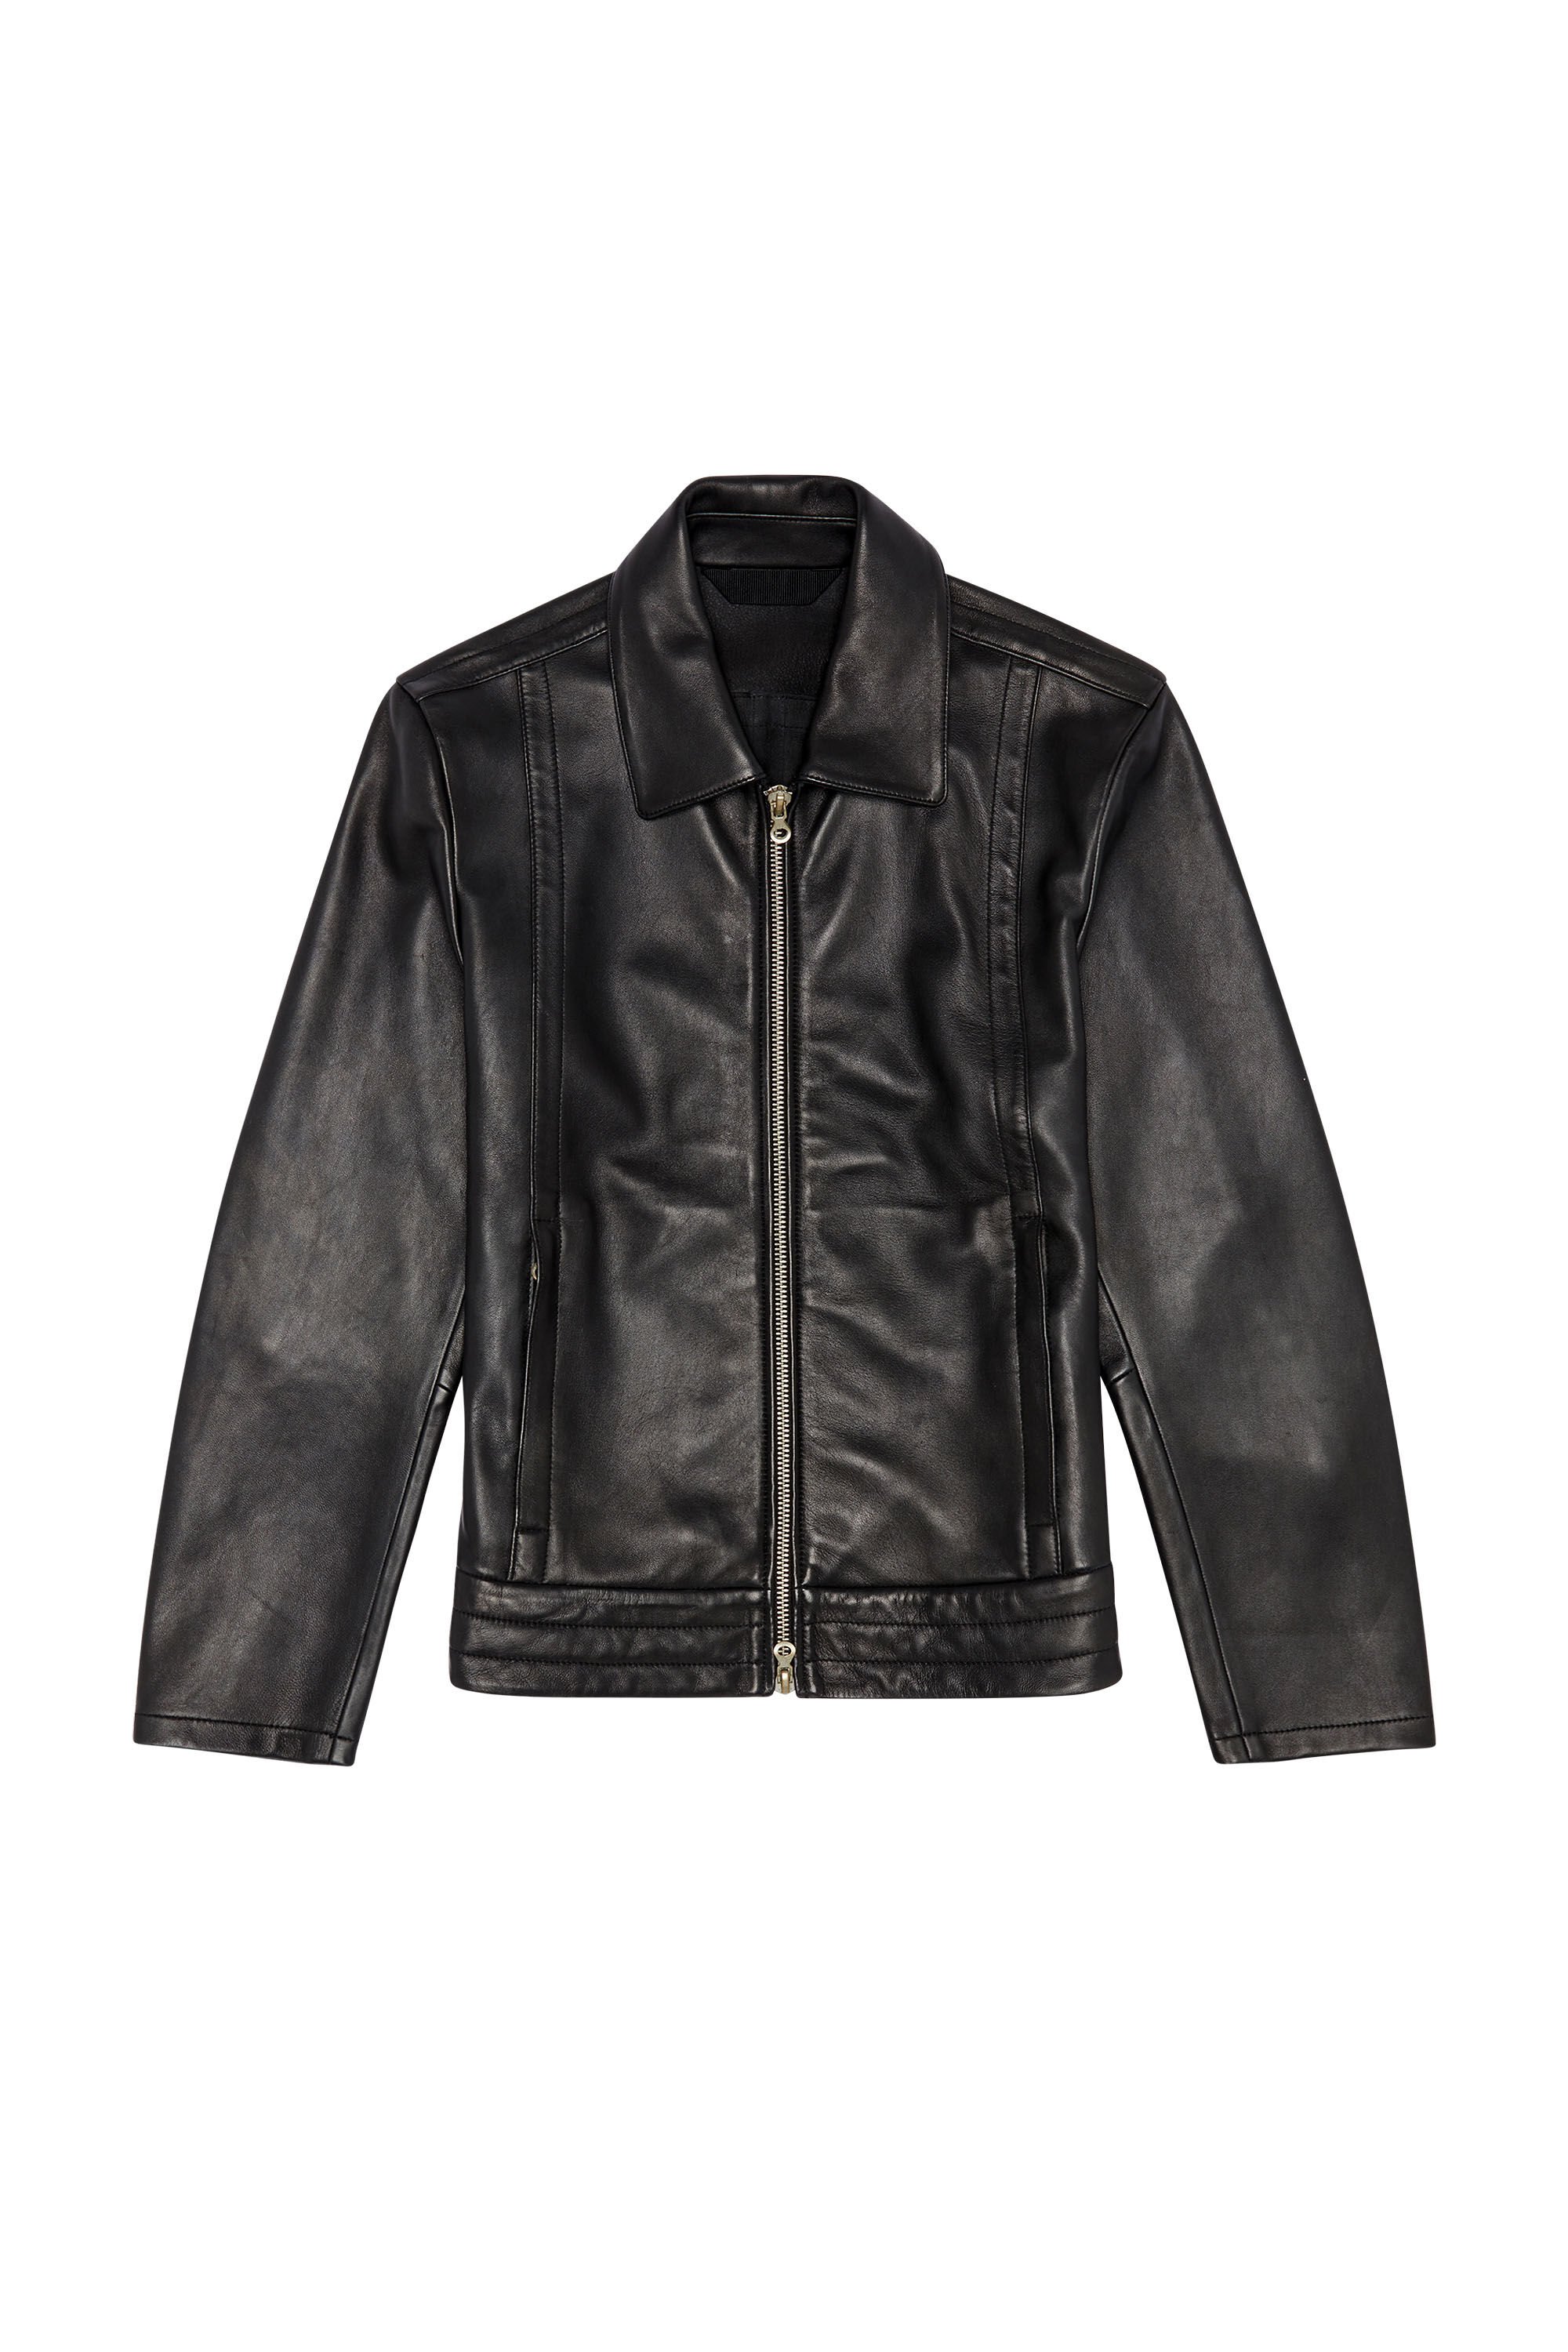 Diesel - L-HUDSON, Man Shirt jacket in supple leather in Black - Image 2